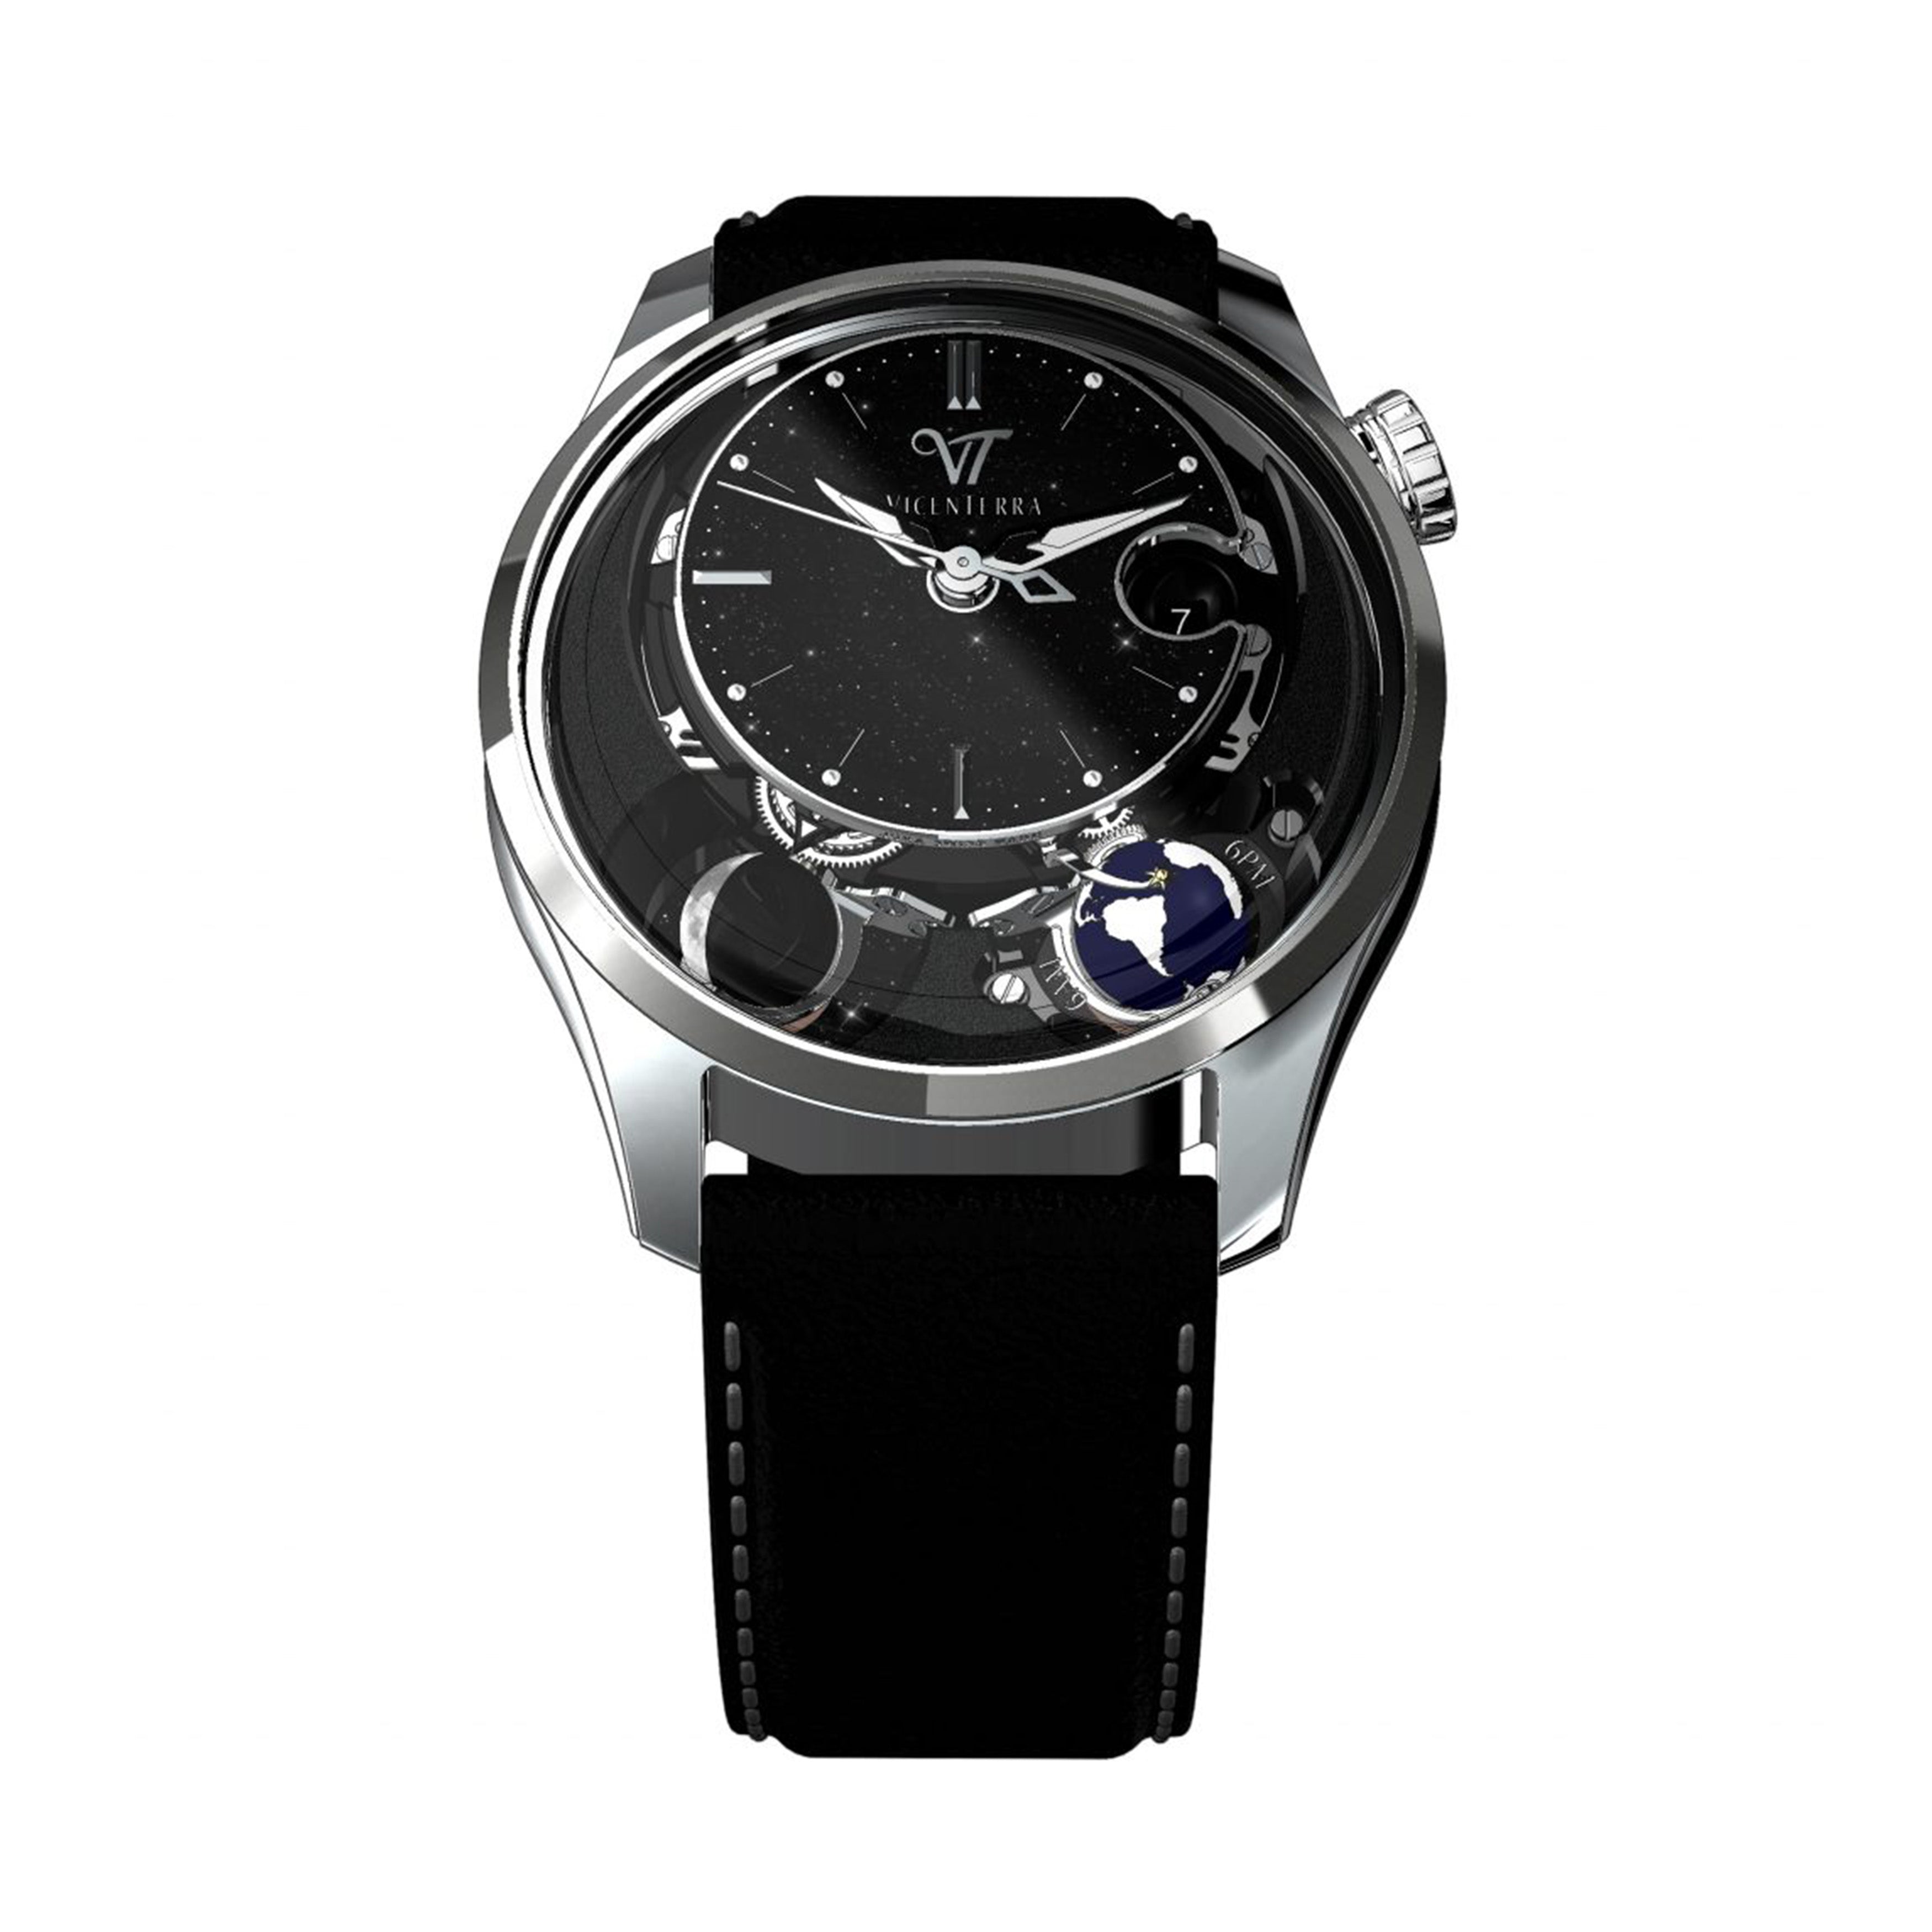 Vicenterra Astroluna Classic T3 Black Cosmos Watch, 41.5mm Black Aventurine Dial, VT.374.01.23